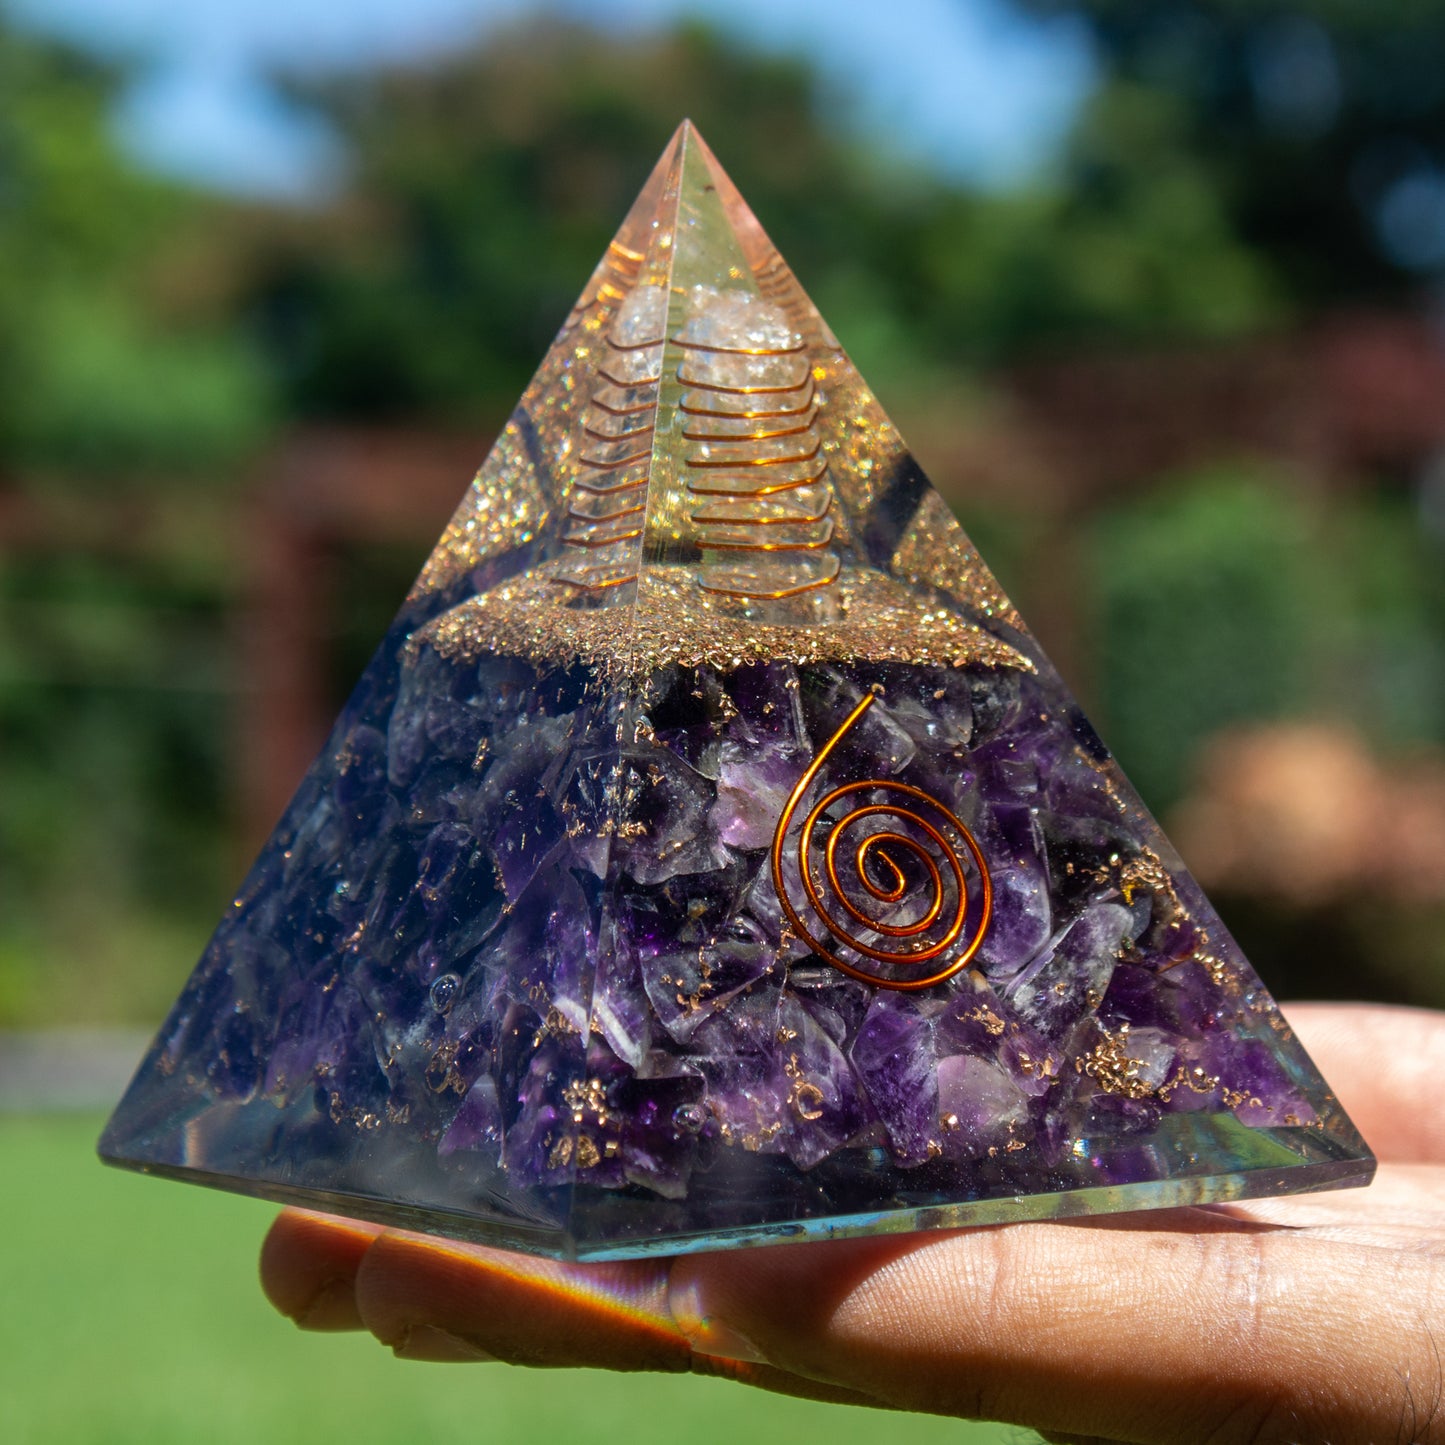 Amethyst Orgone Pyramid for Inner Peace & Calm